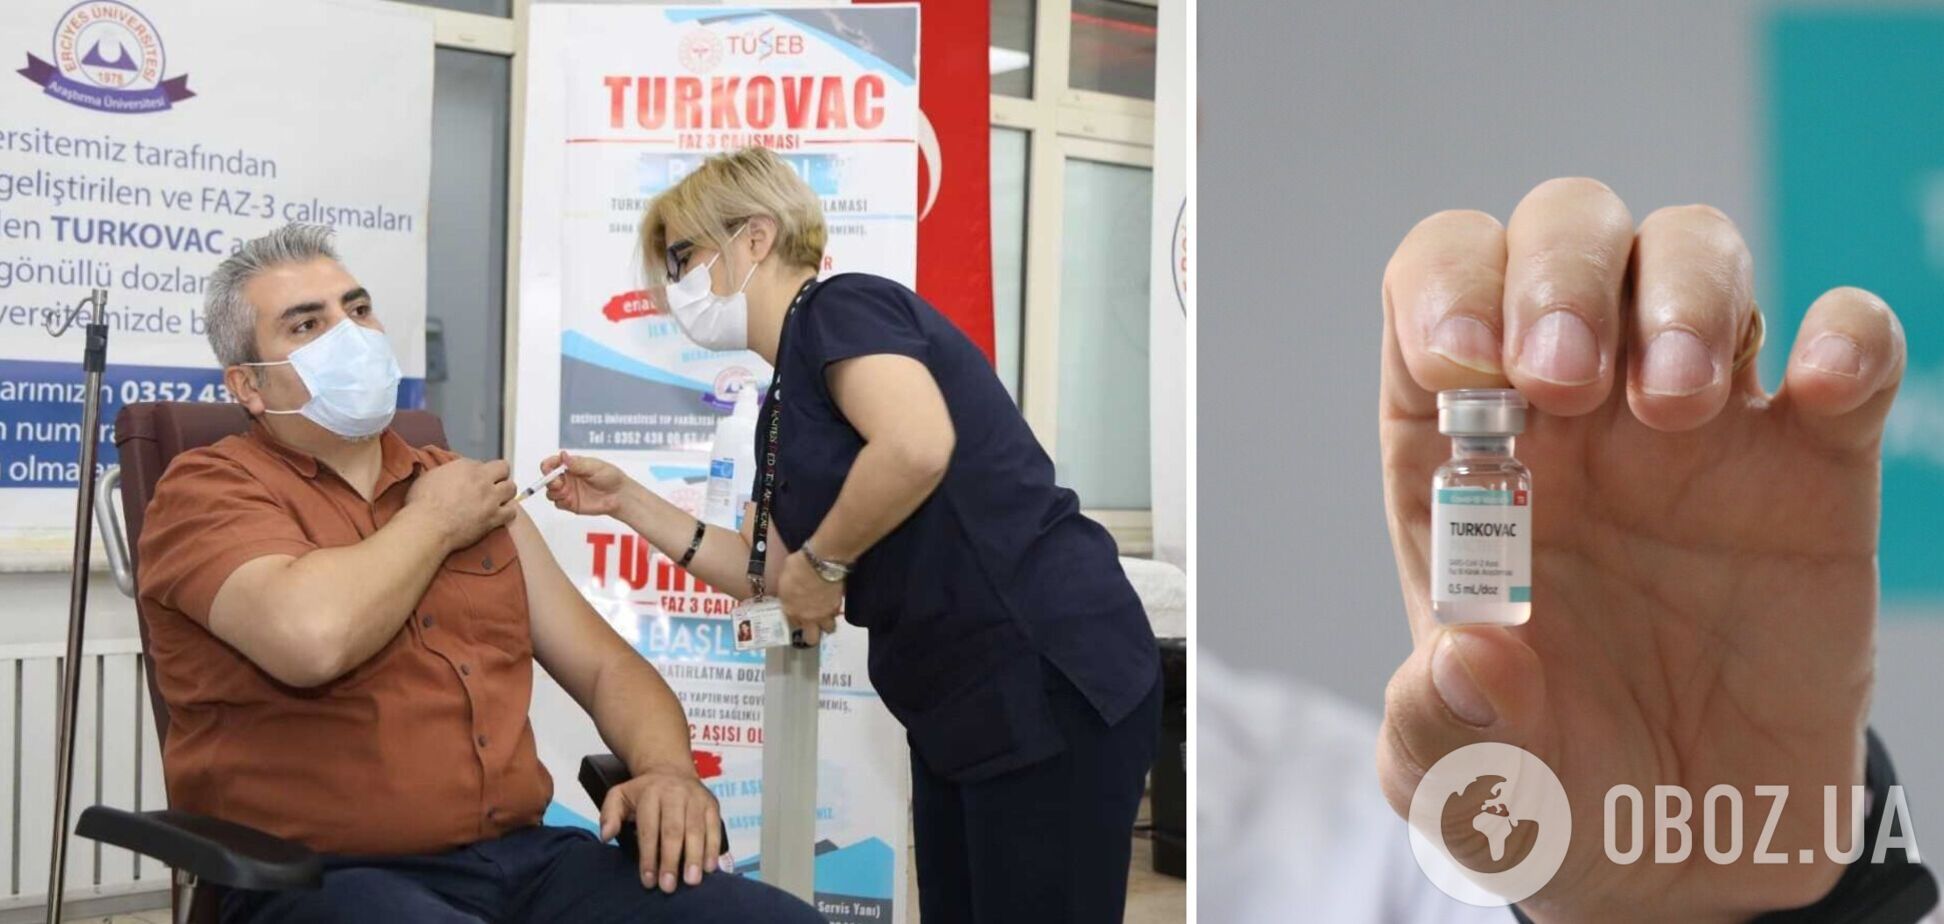 В Турции разрешили колоть собственную вакцину от COVID-19: что известно о препарате Turkovac